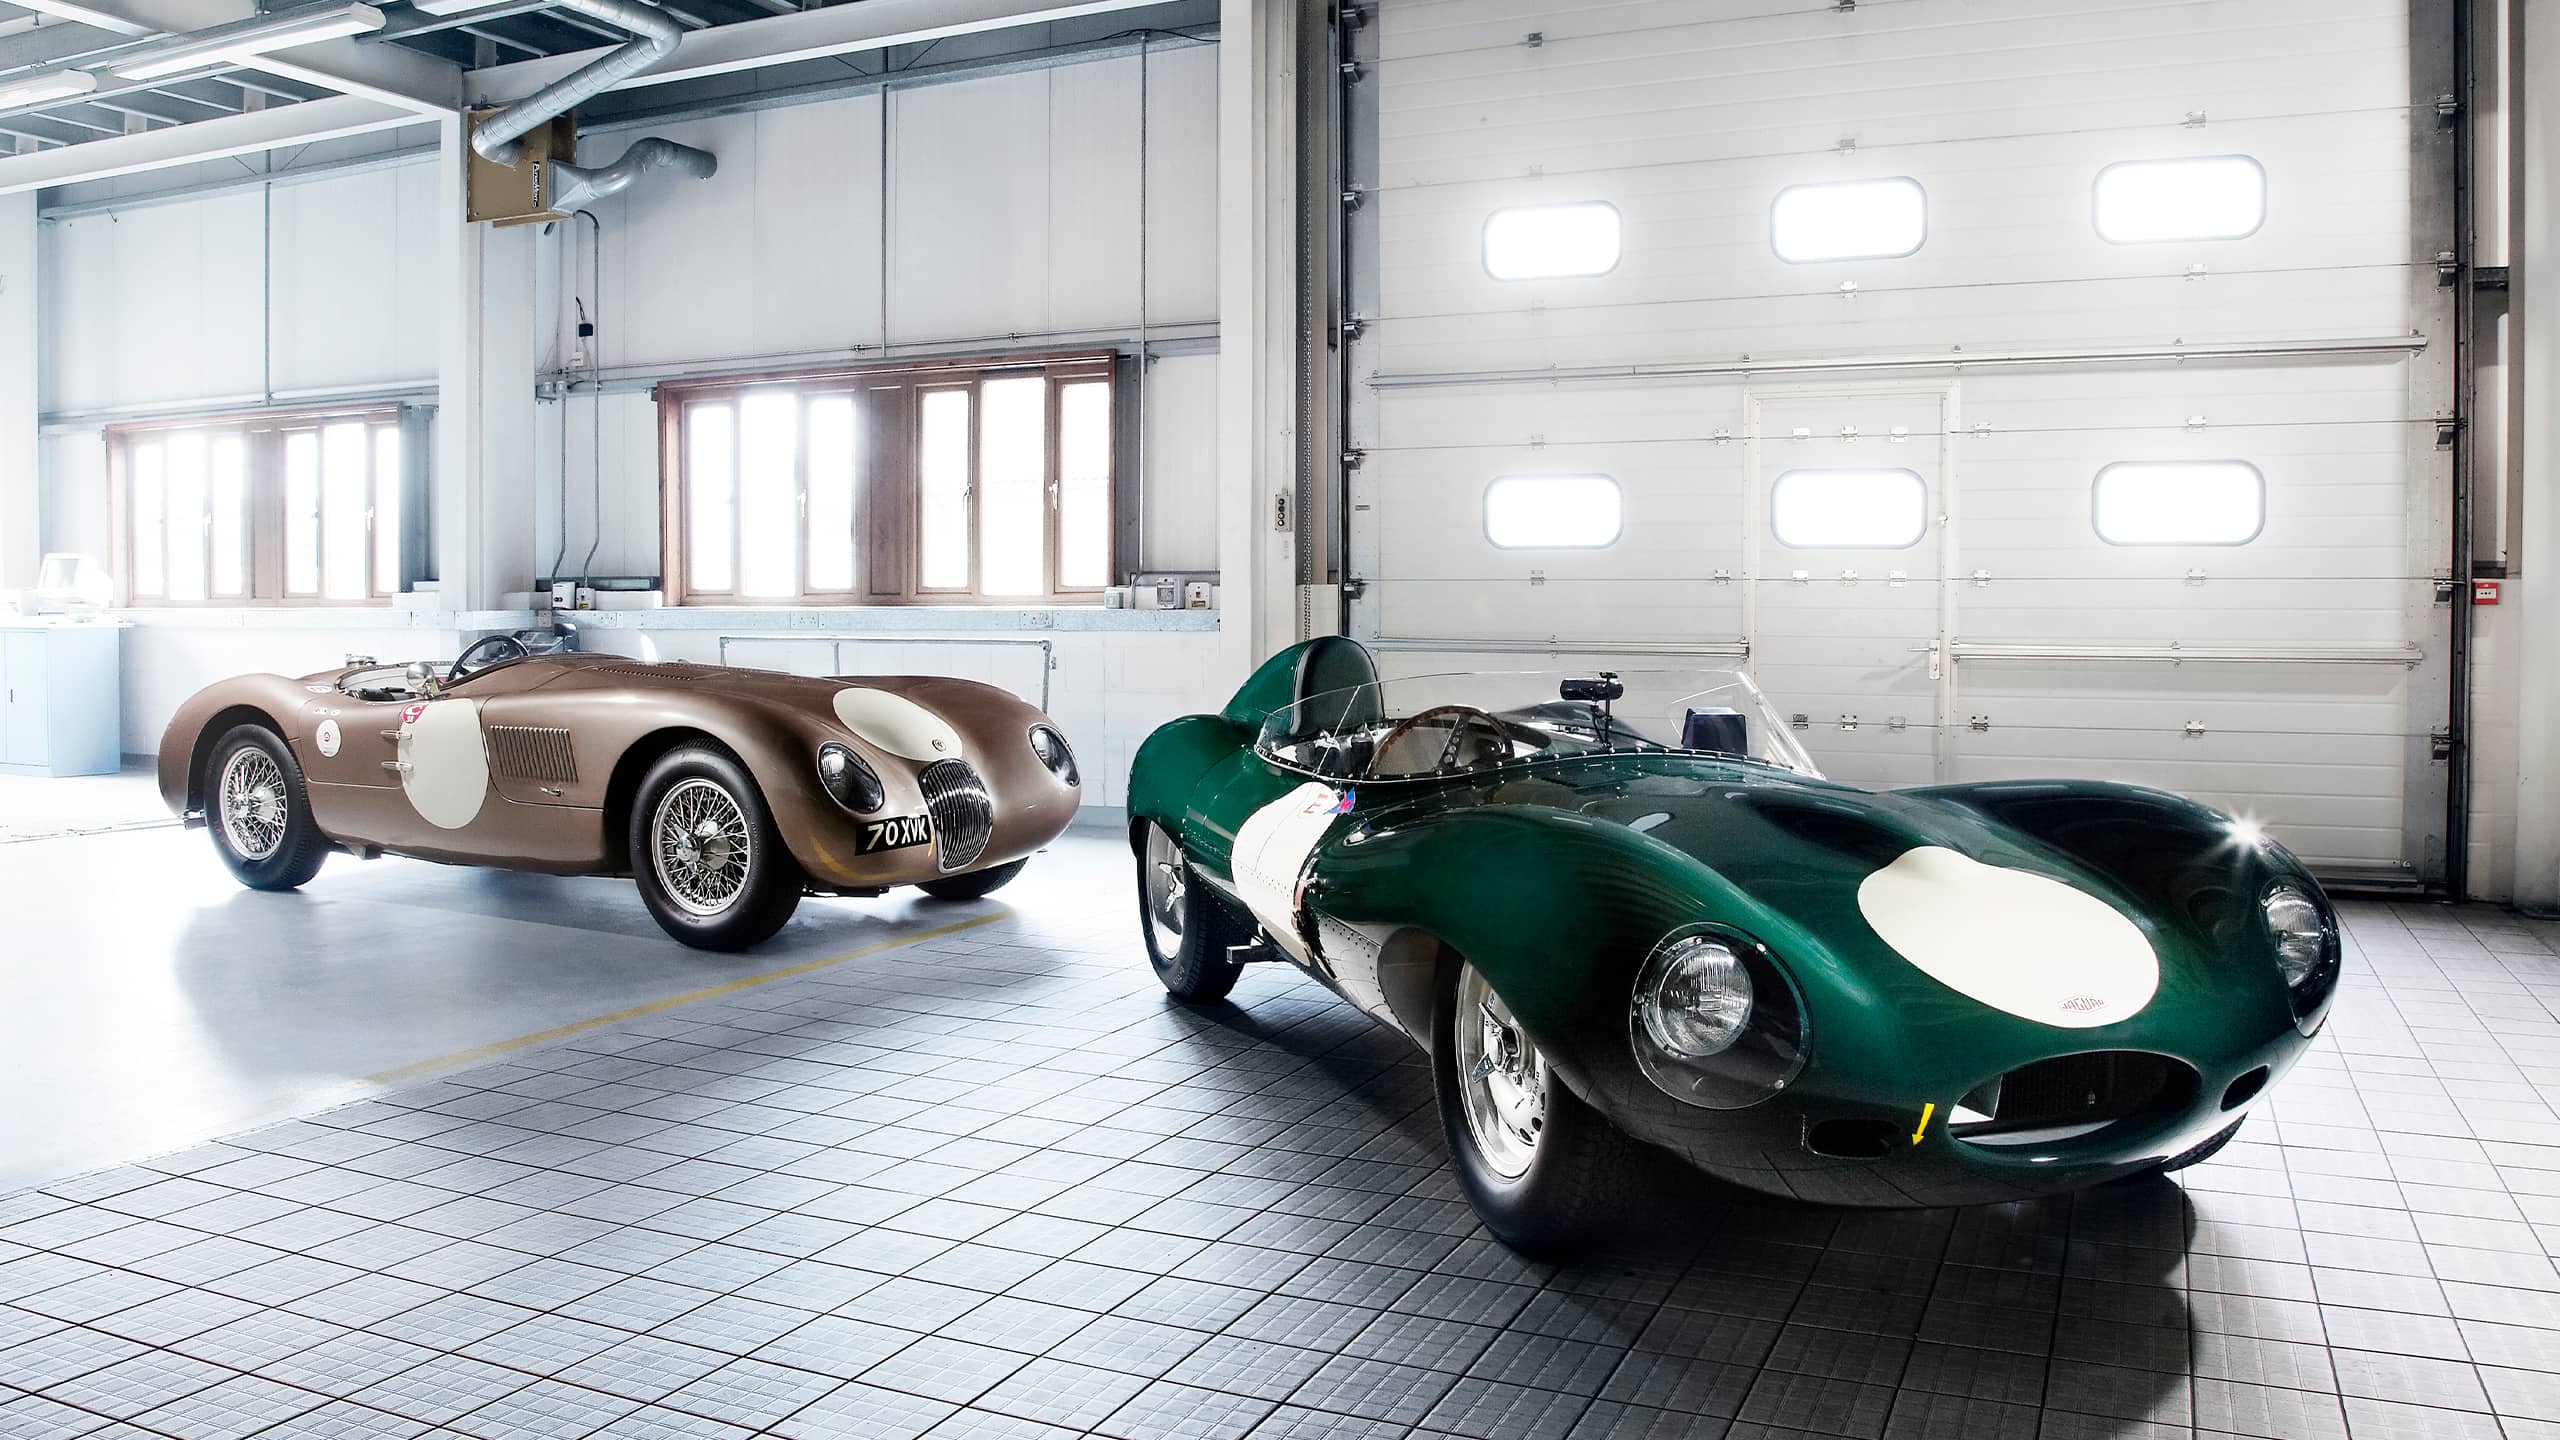 Two Classic Jaguar Parked at Plant